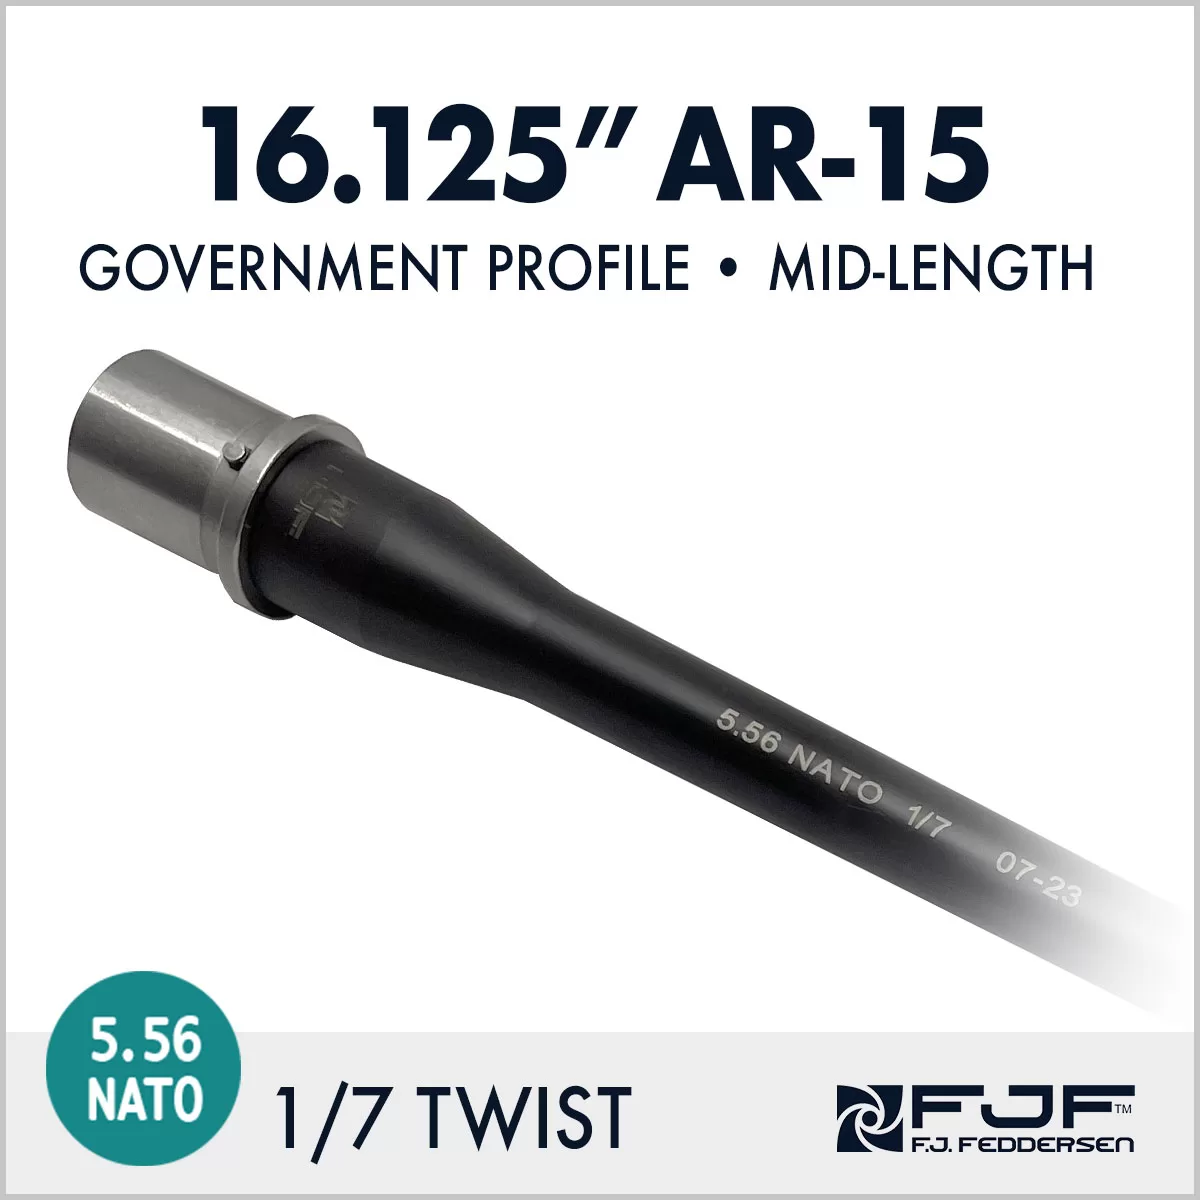 AR15 / M16 Barrel by FJ Feddersen - Government Profile - 16.125" Mid-length